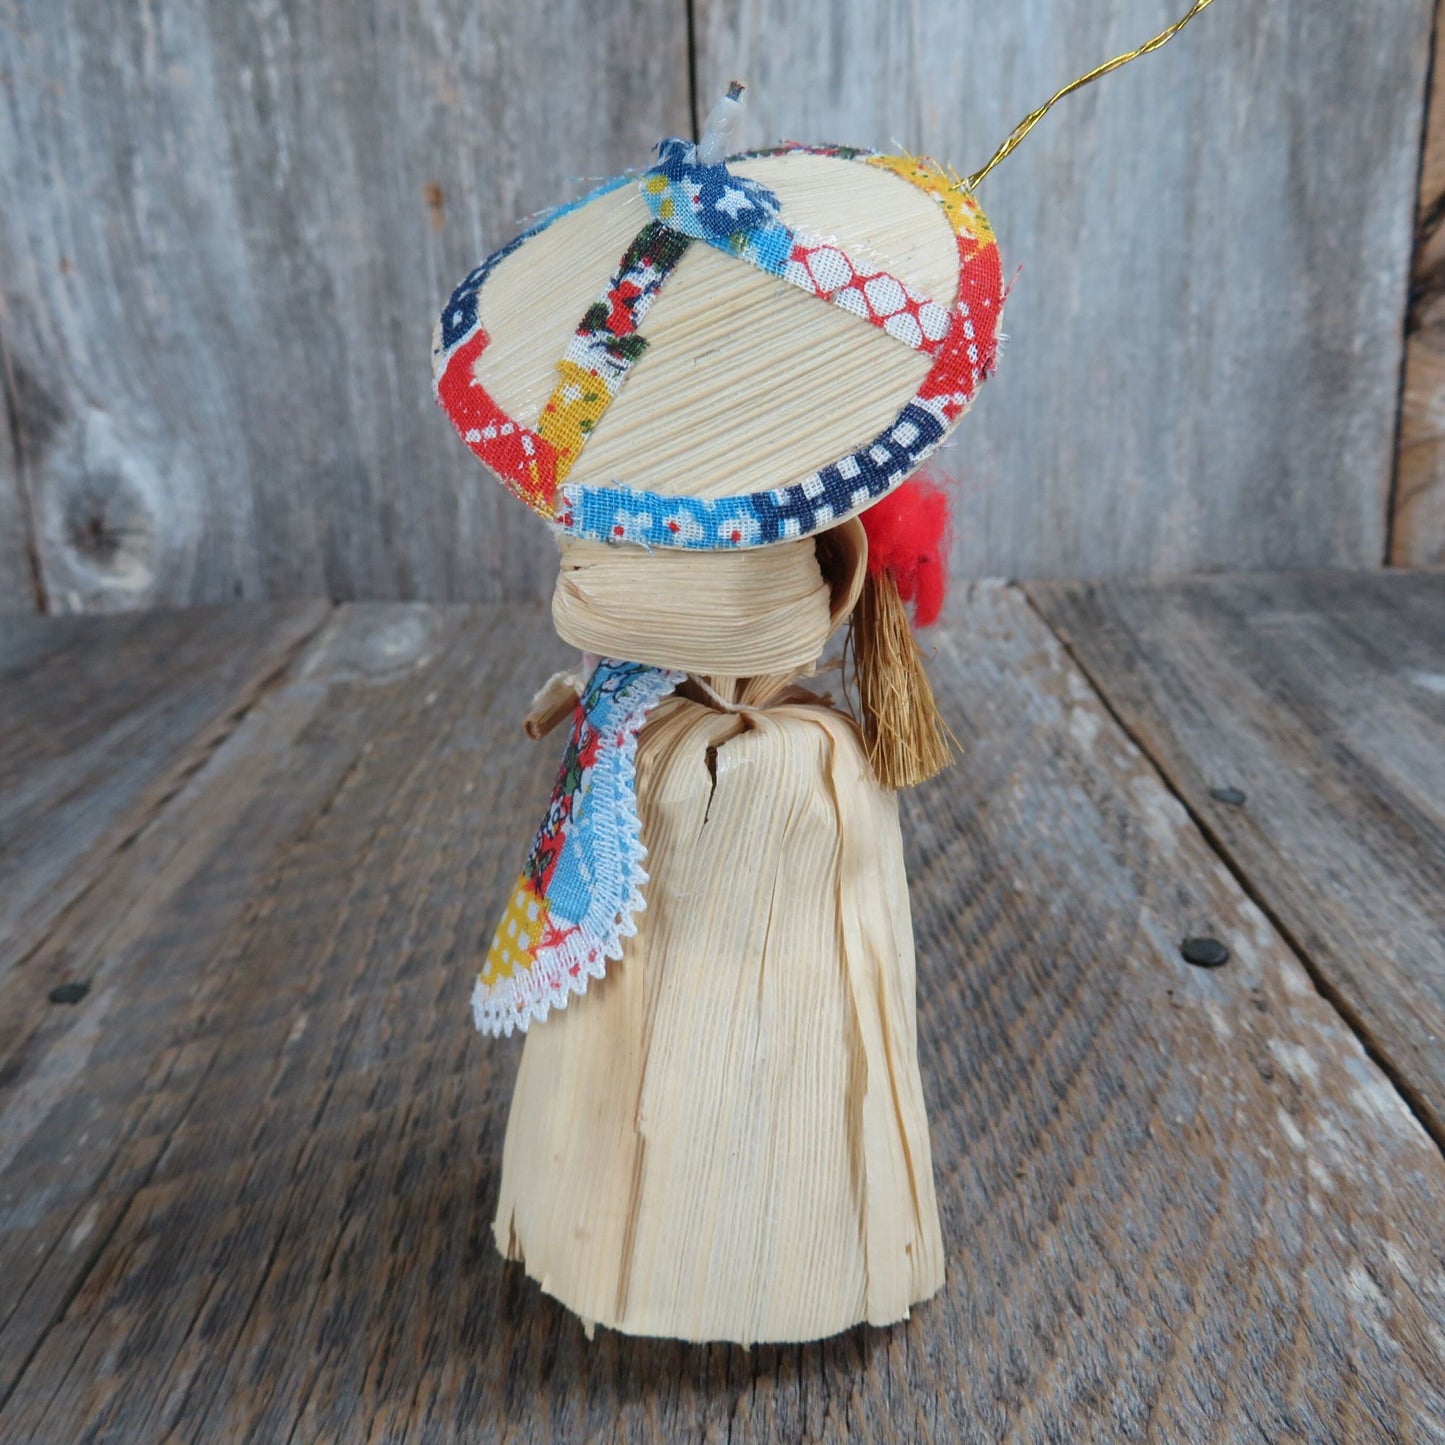 Vintage Corn Husk Doll Ornament Lady with Umbrella Patchwork Apron Christmas